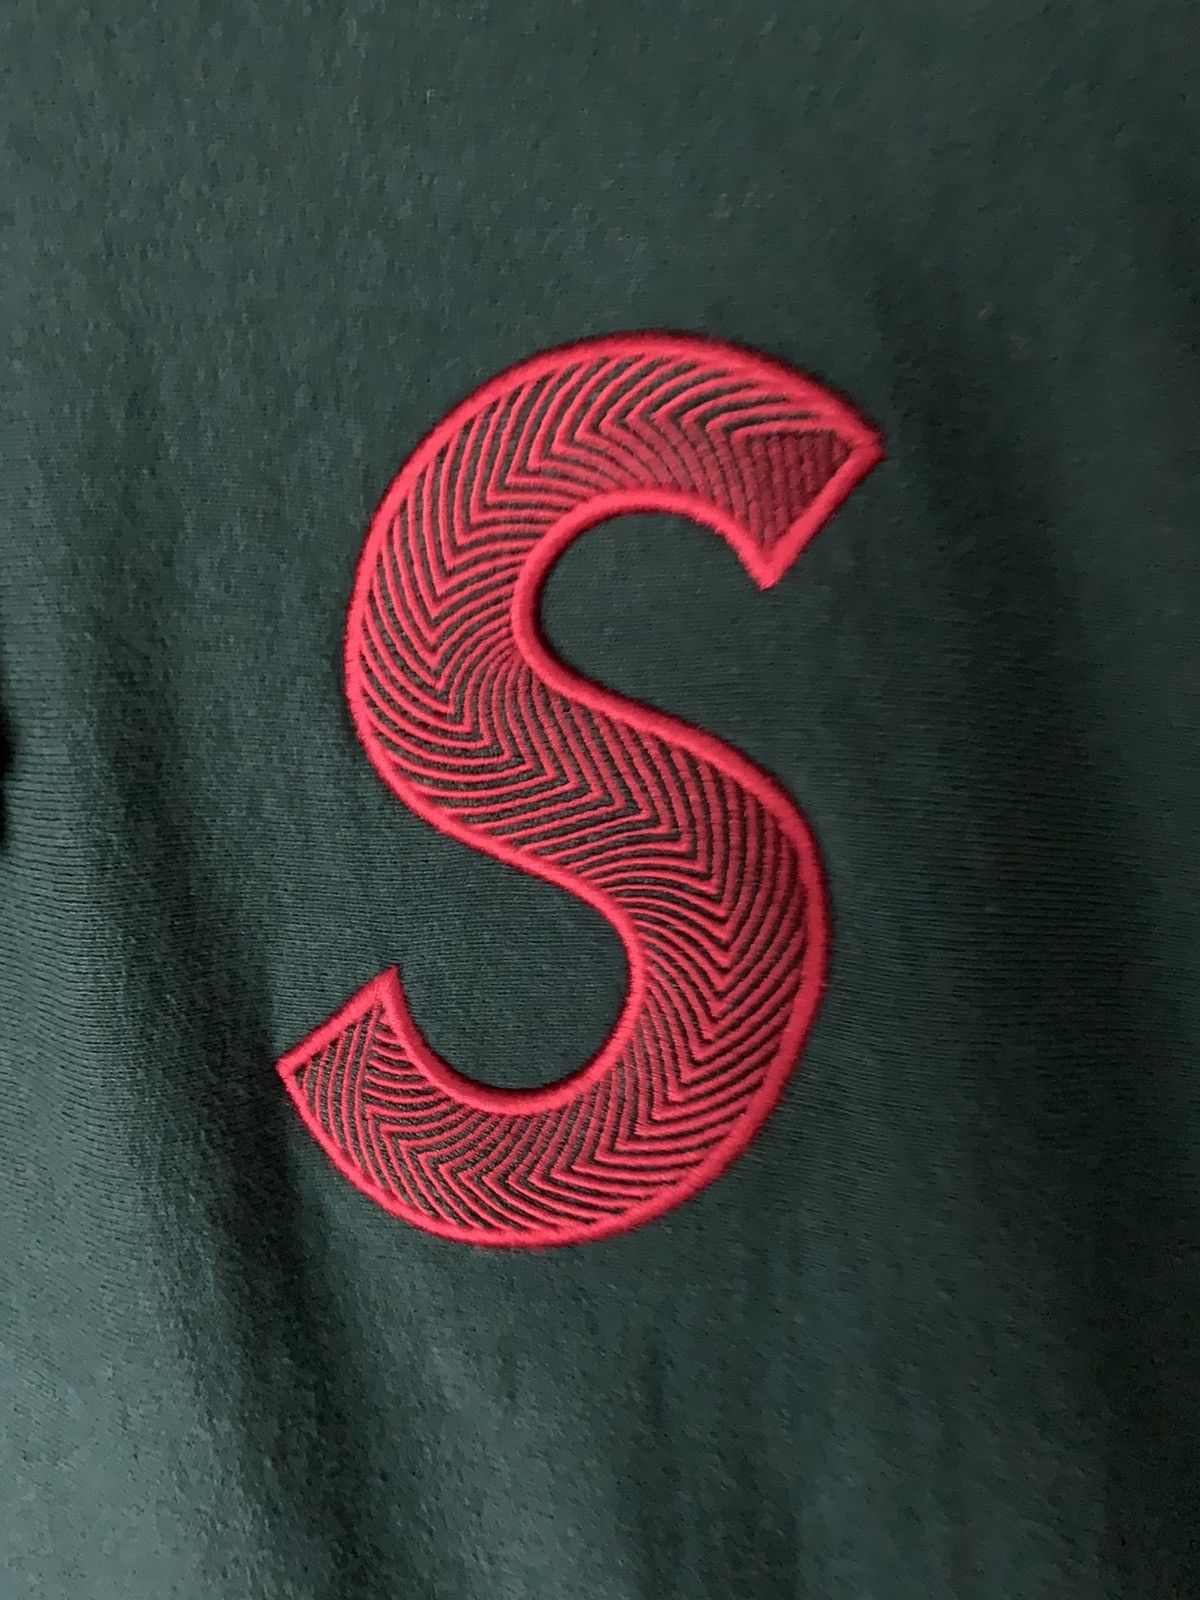 Supreme Supreme S Logo Hooded Sweatshirt FW18 Dark Green Size US M / EU 48-50 / 2 - 4 Thumbnail